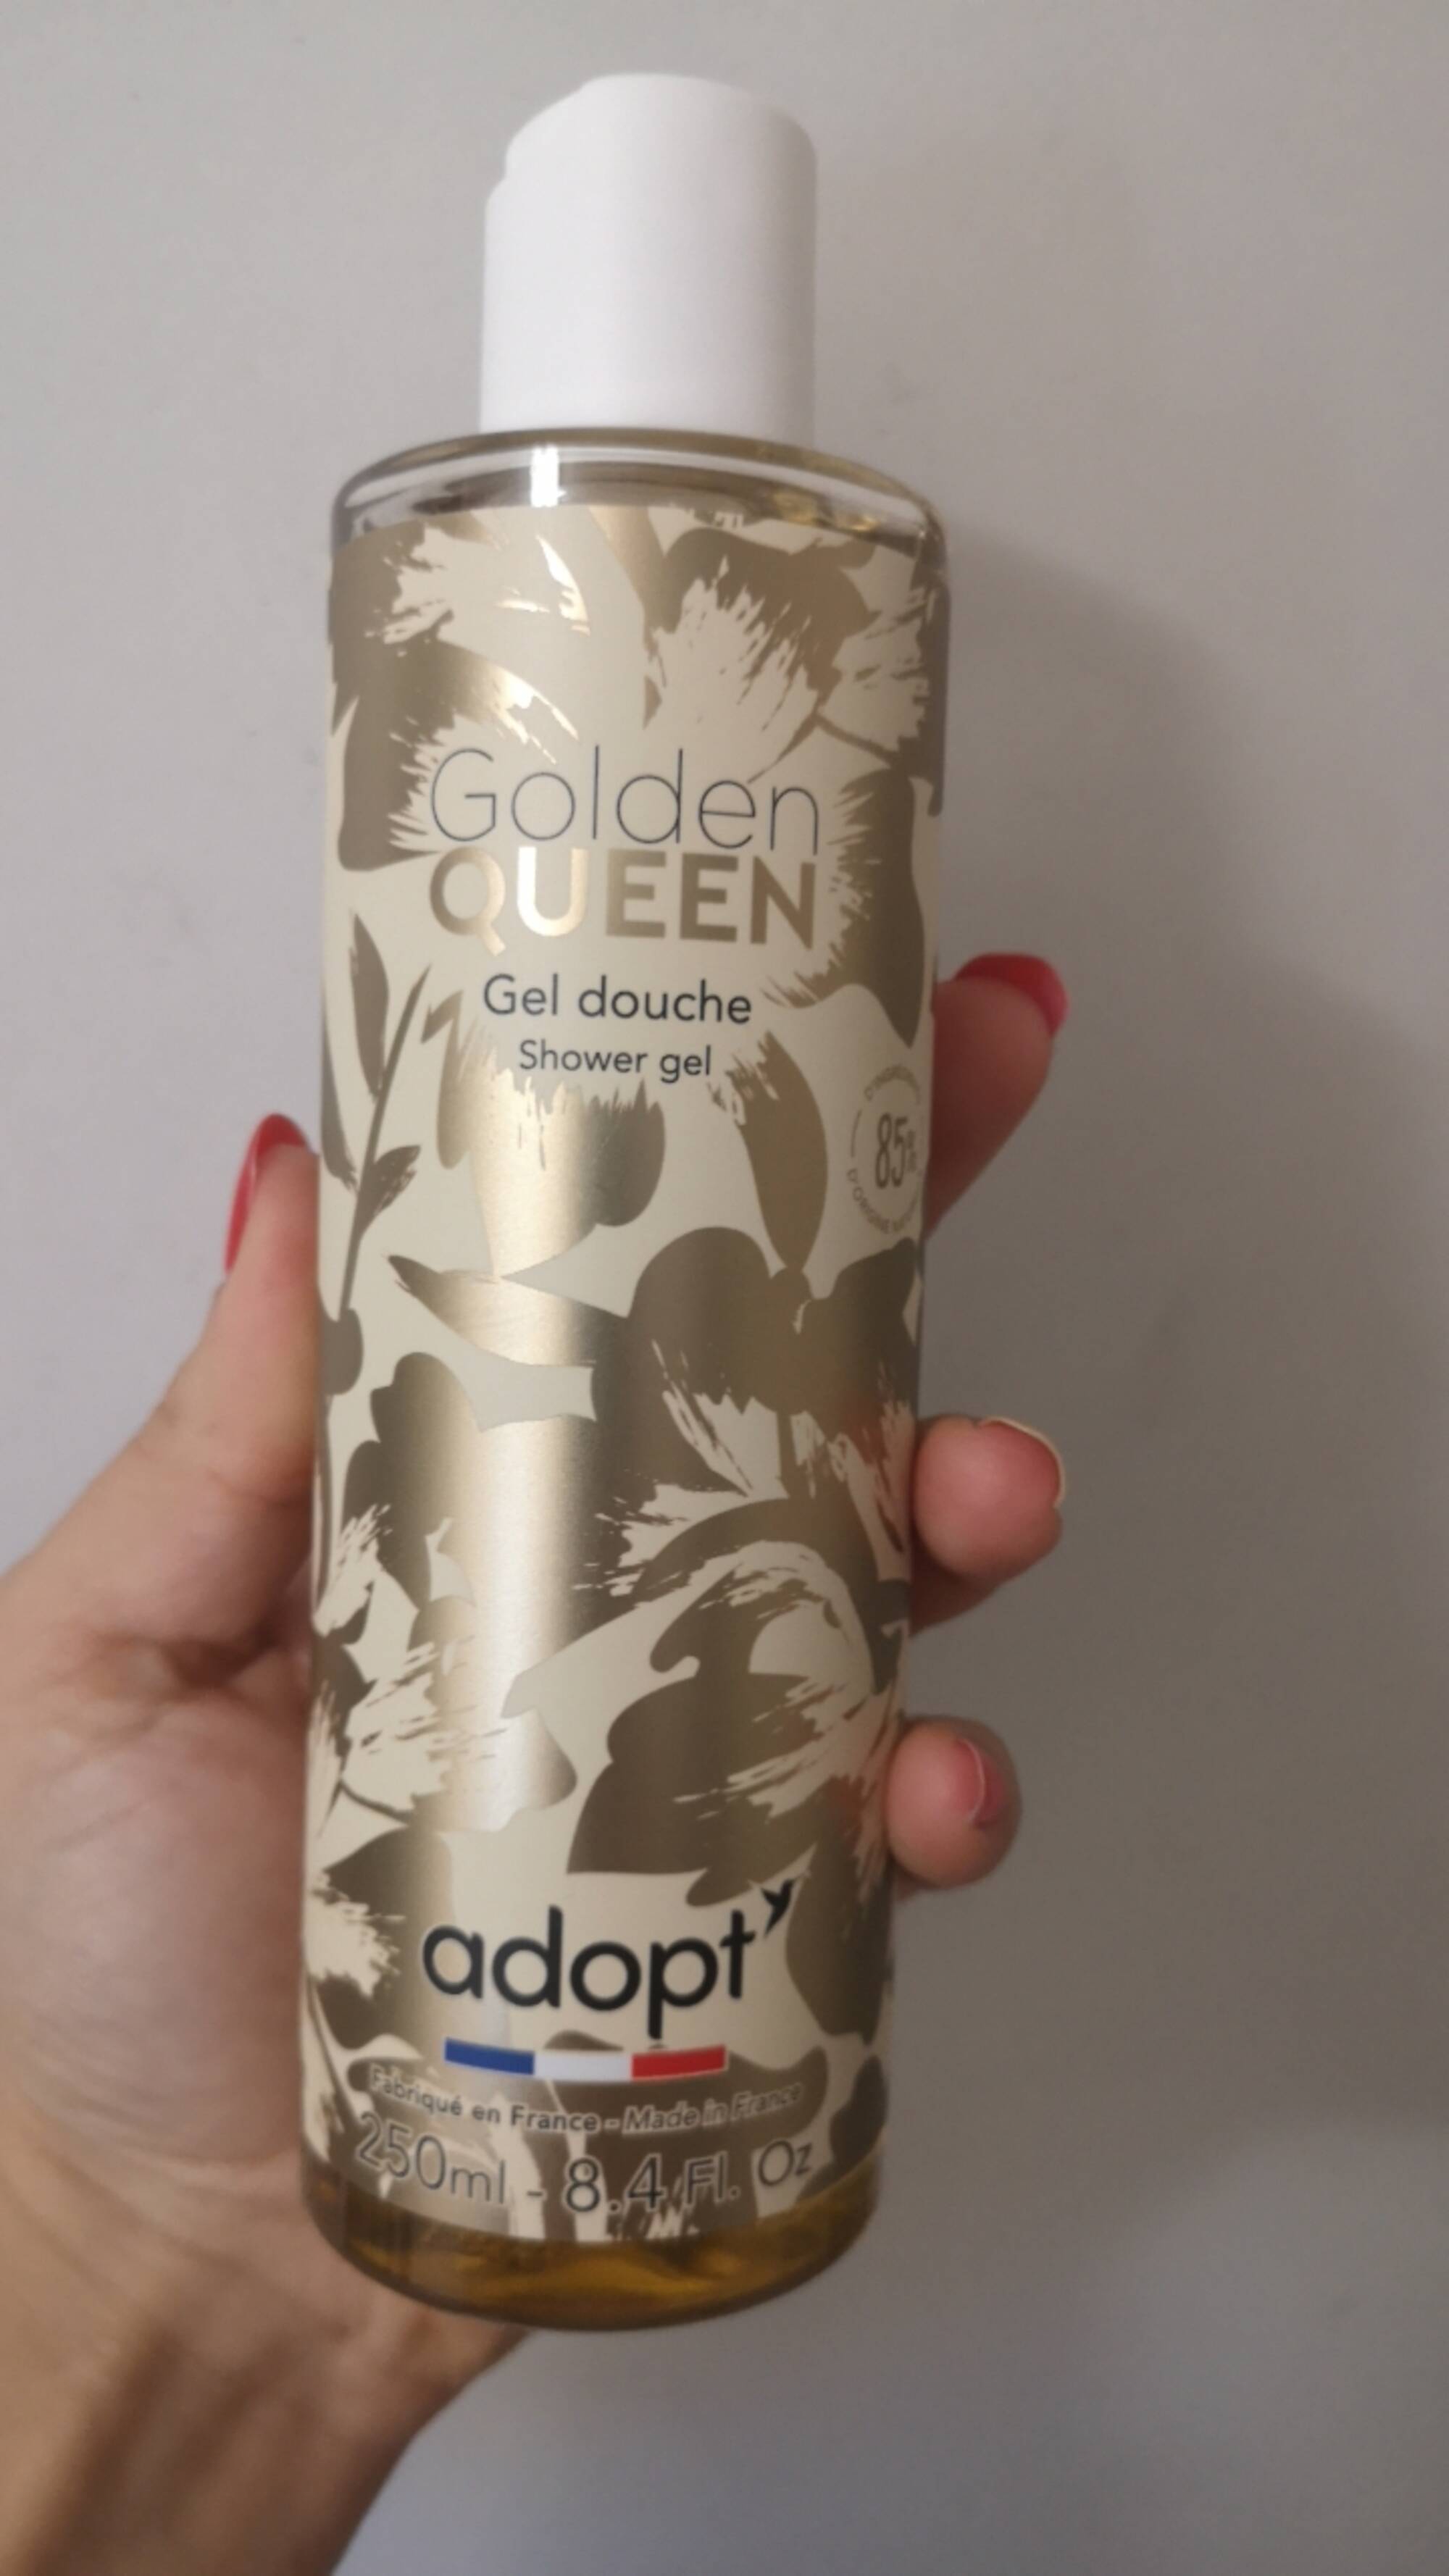 ADOPT' - Golden queen - Gel douche 